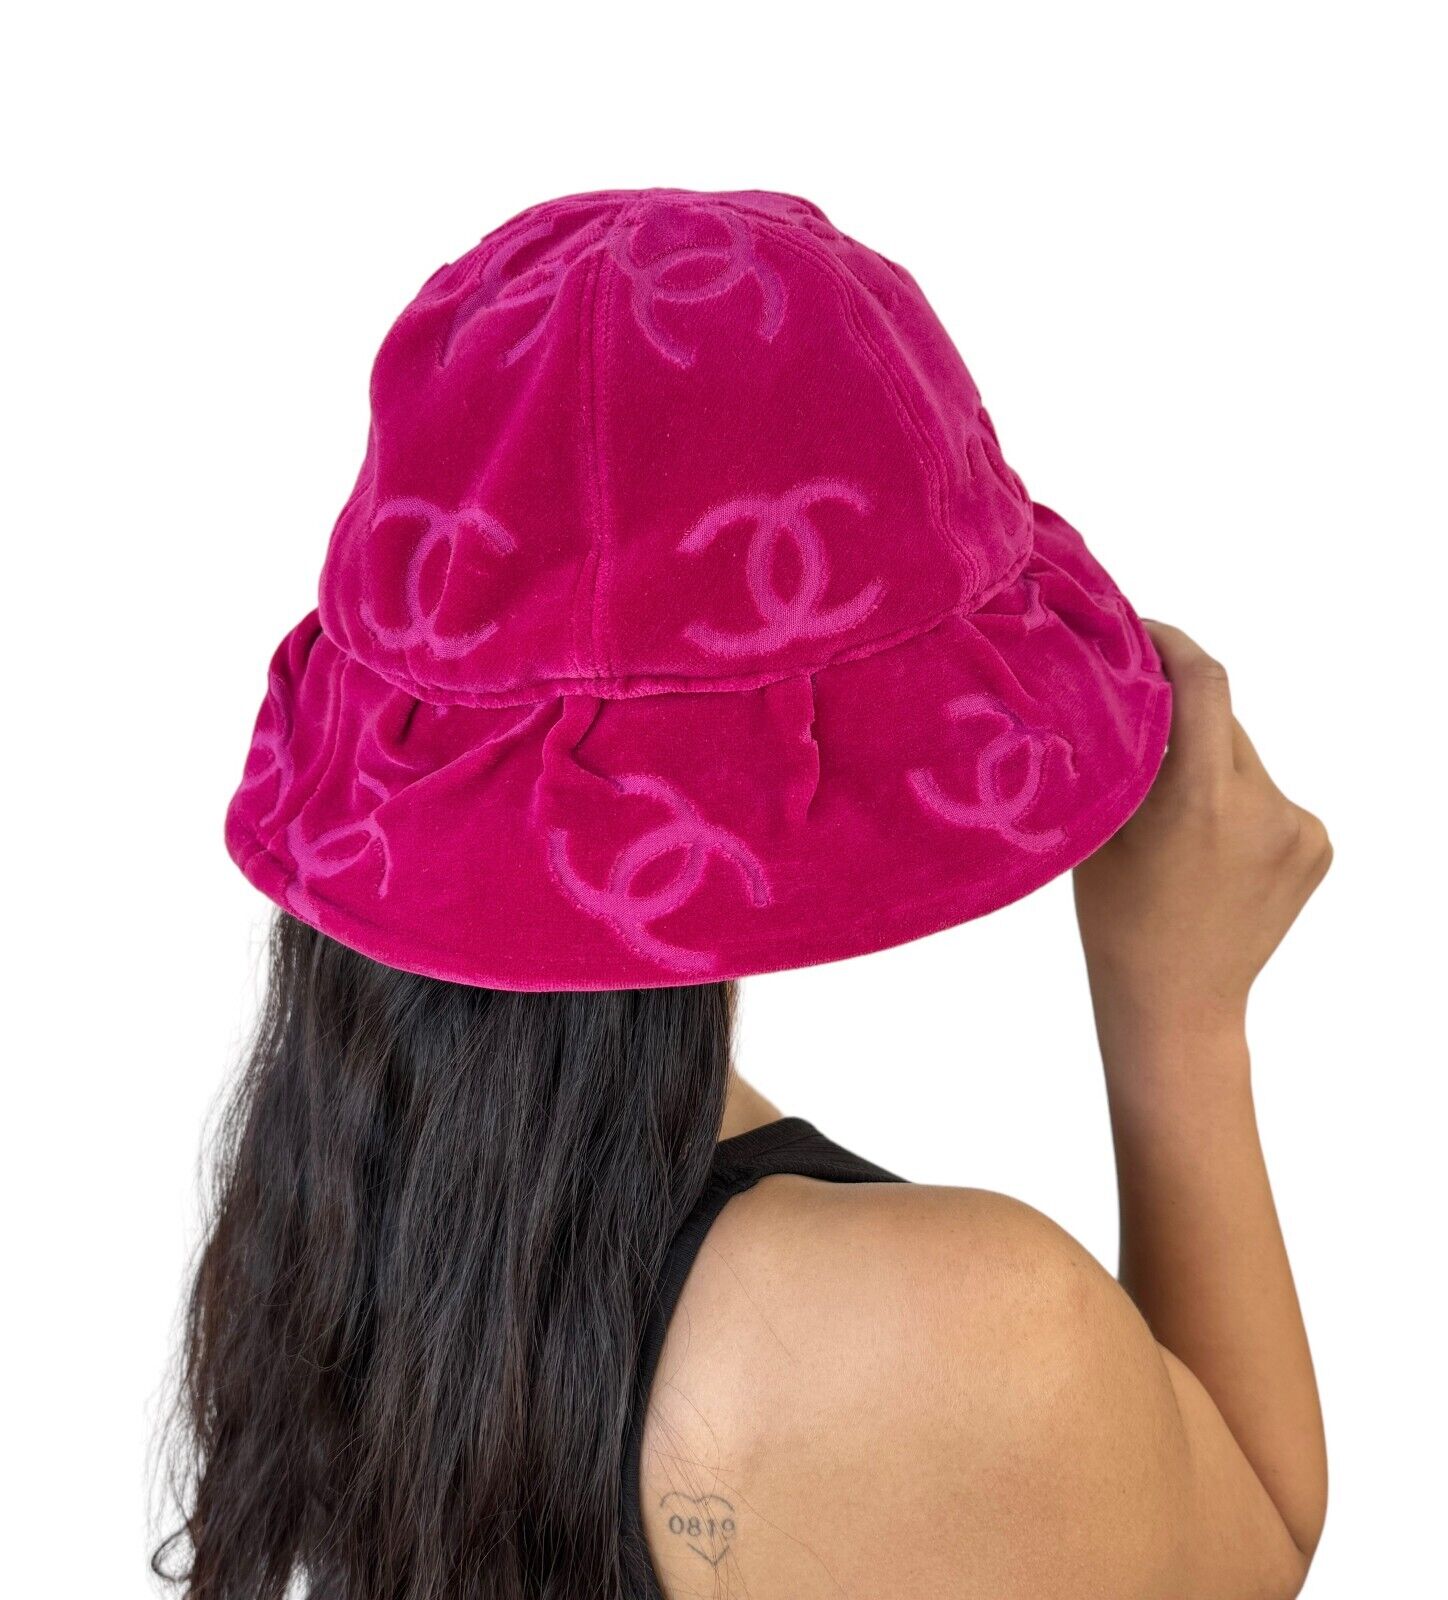 CHANEL Vintage 1996 CC Mark Bucket Hat #59 Accessory Pink Velour Rank AB+